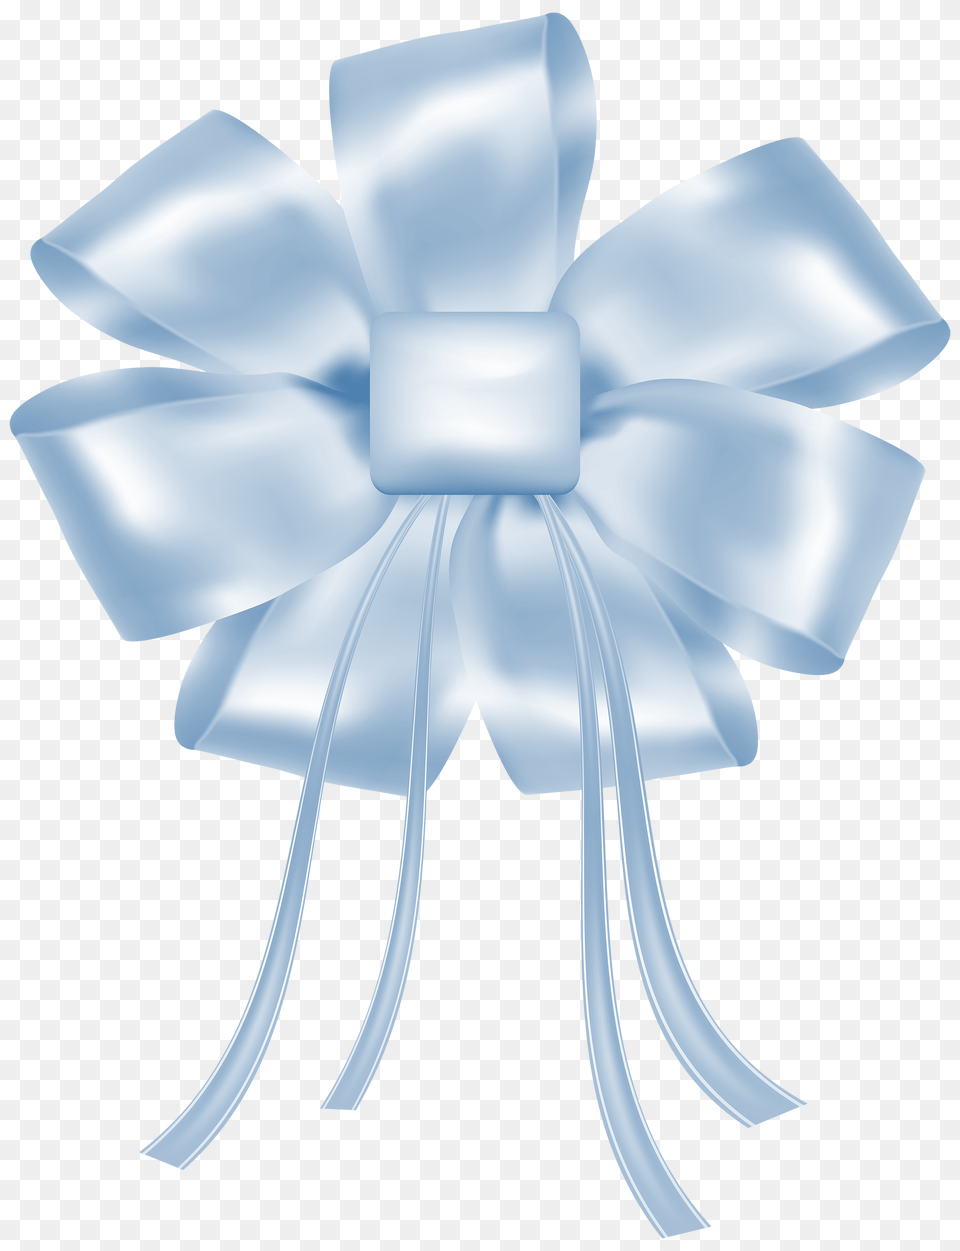 Result For Transparent Tiffany Blue Bow Backgrounds, Gift, Formal Wear Png Image